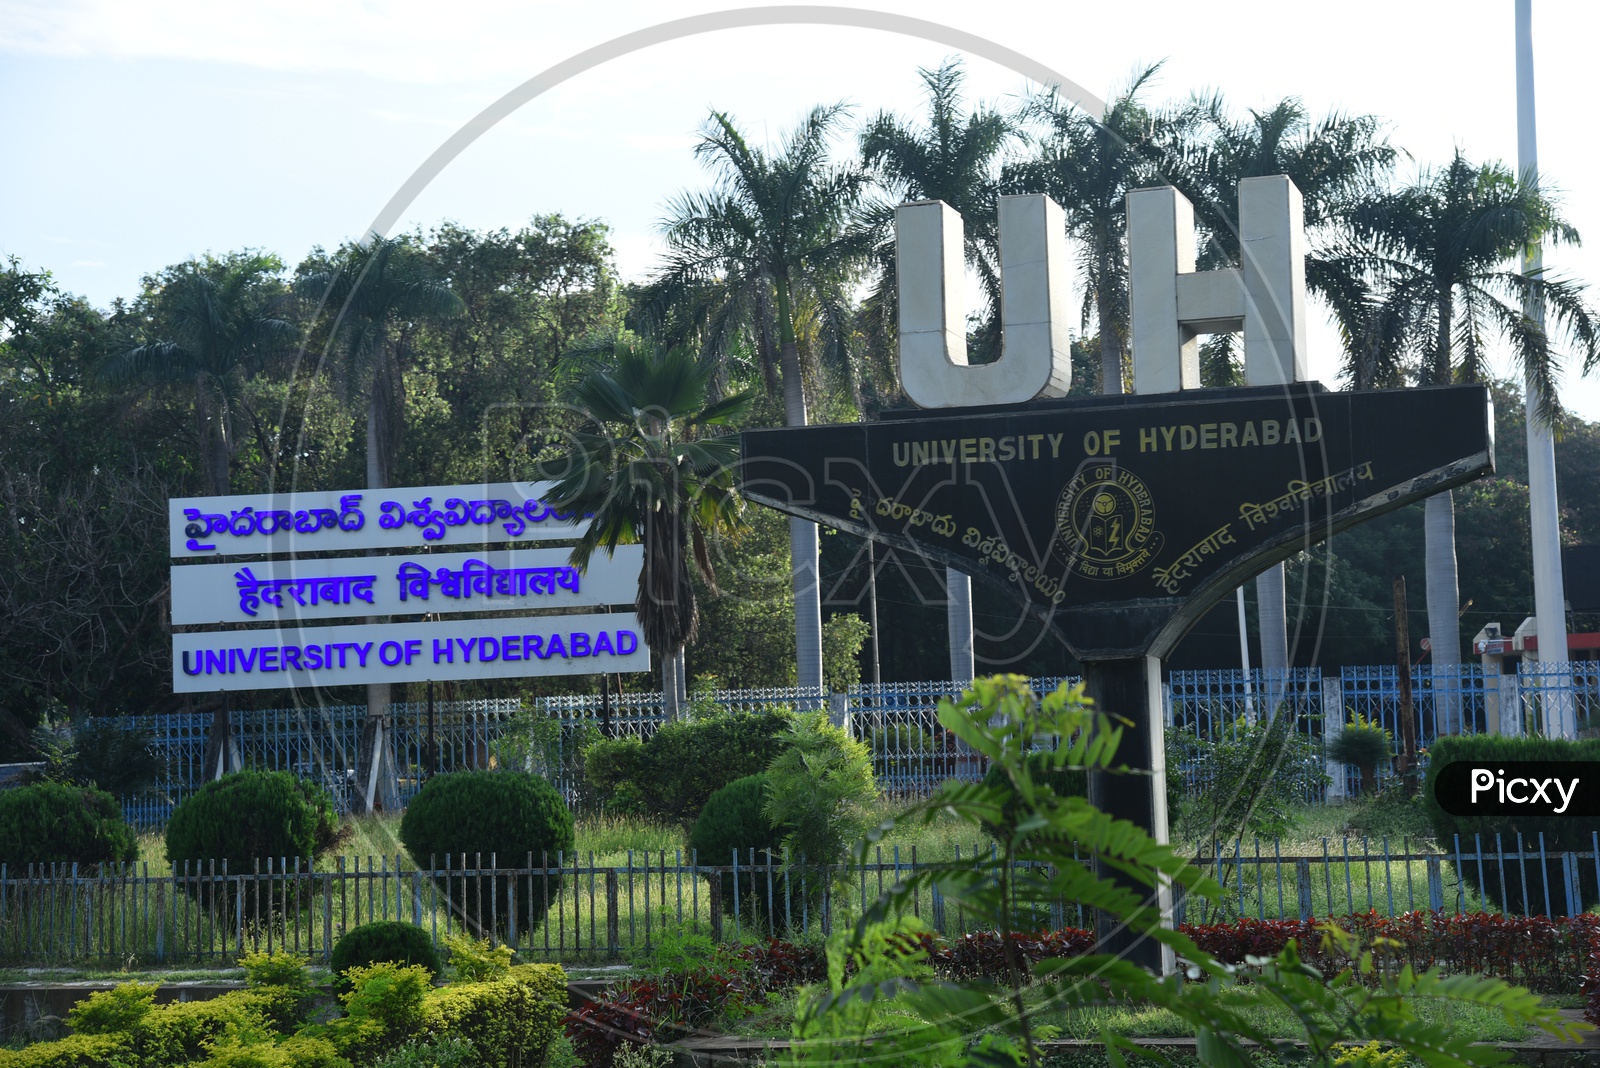 University Of Hyderabad Or Hyderabad Central University